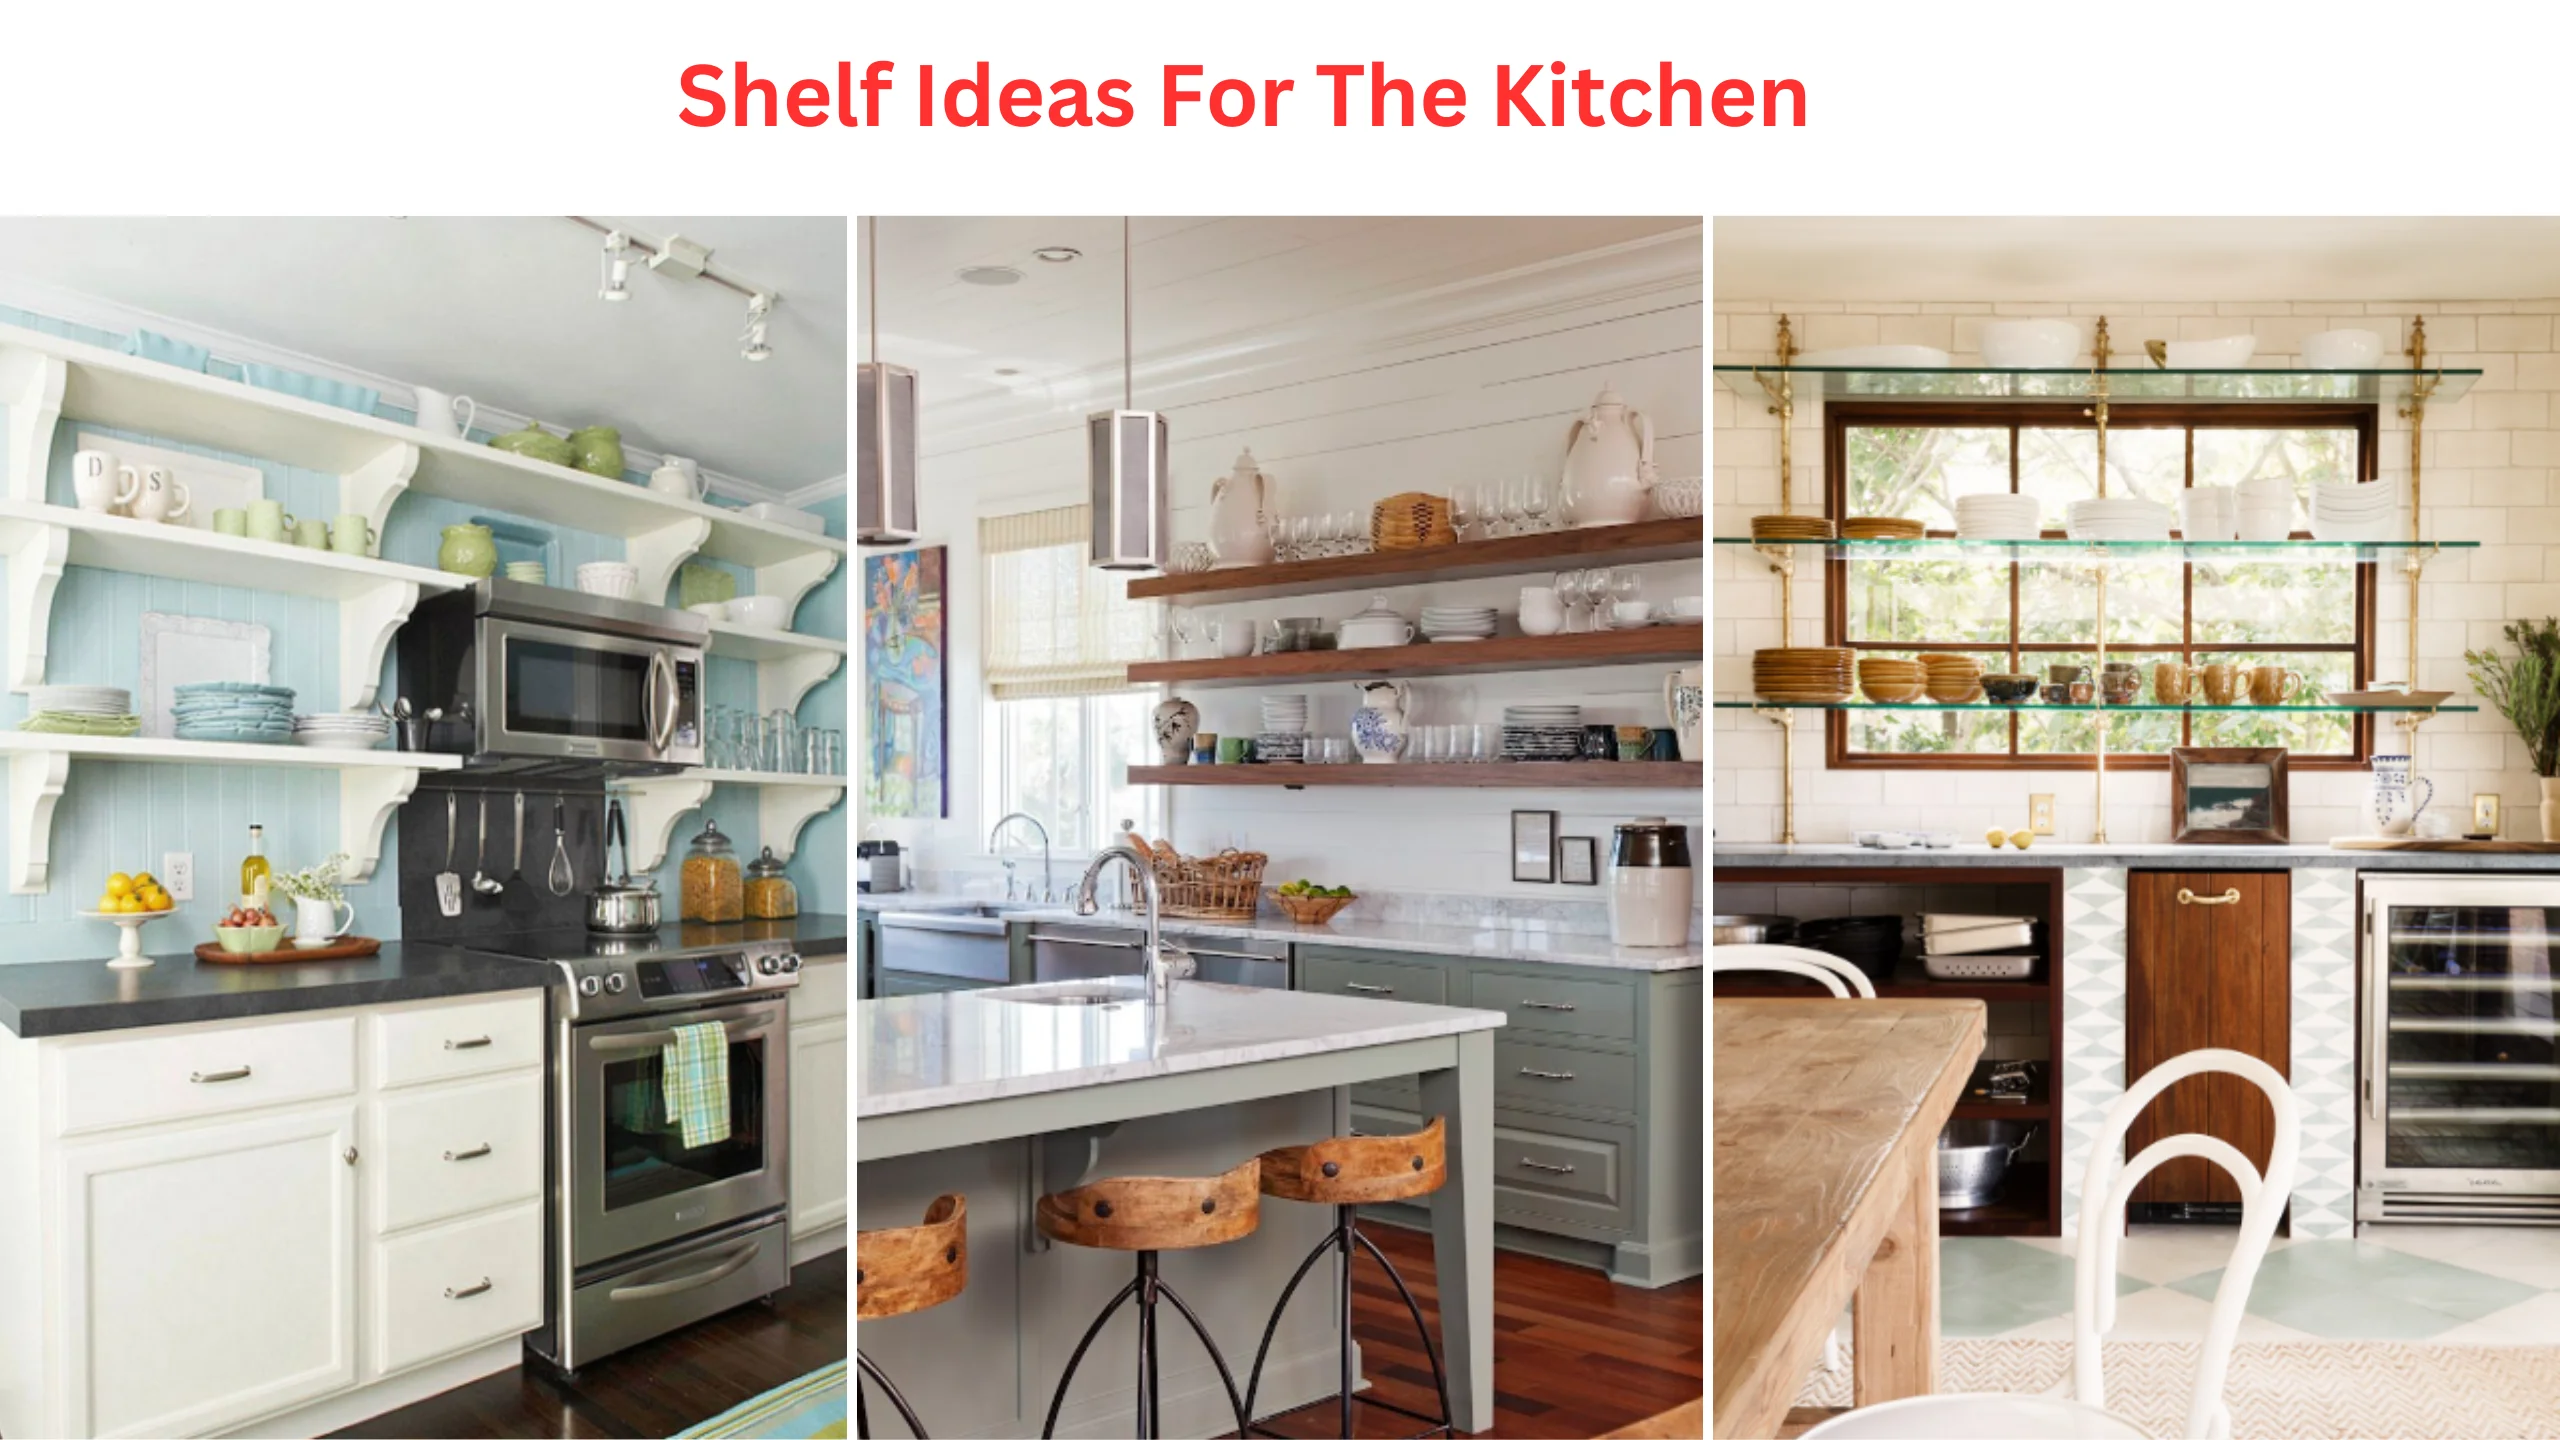 Shelf ideas for the kitchen 1 (2)